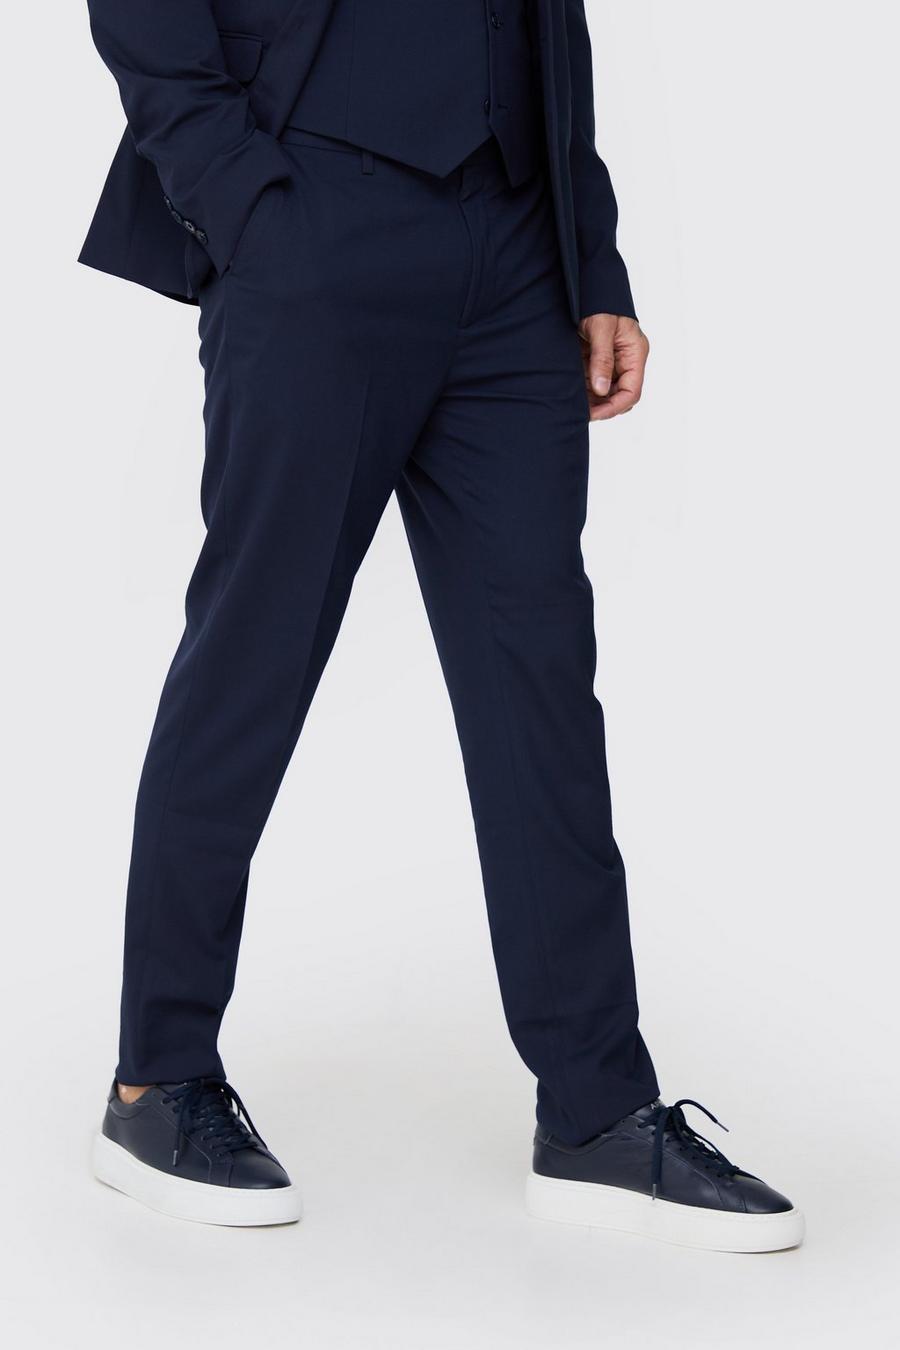 Pantalón de traje Tall básico ajustado en azul marino, Navy